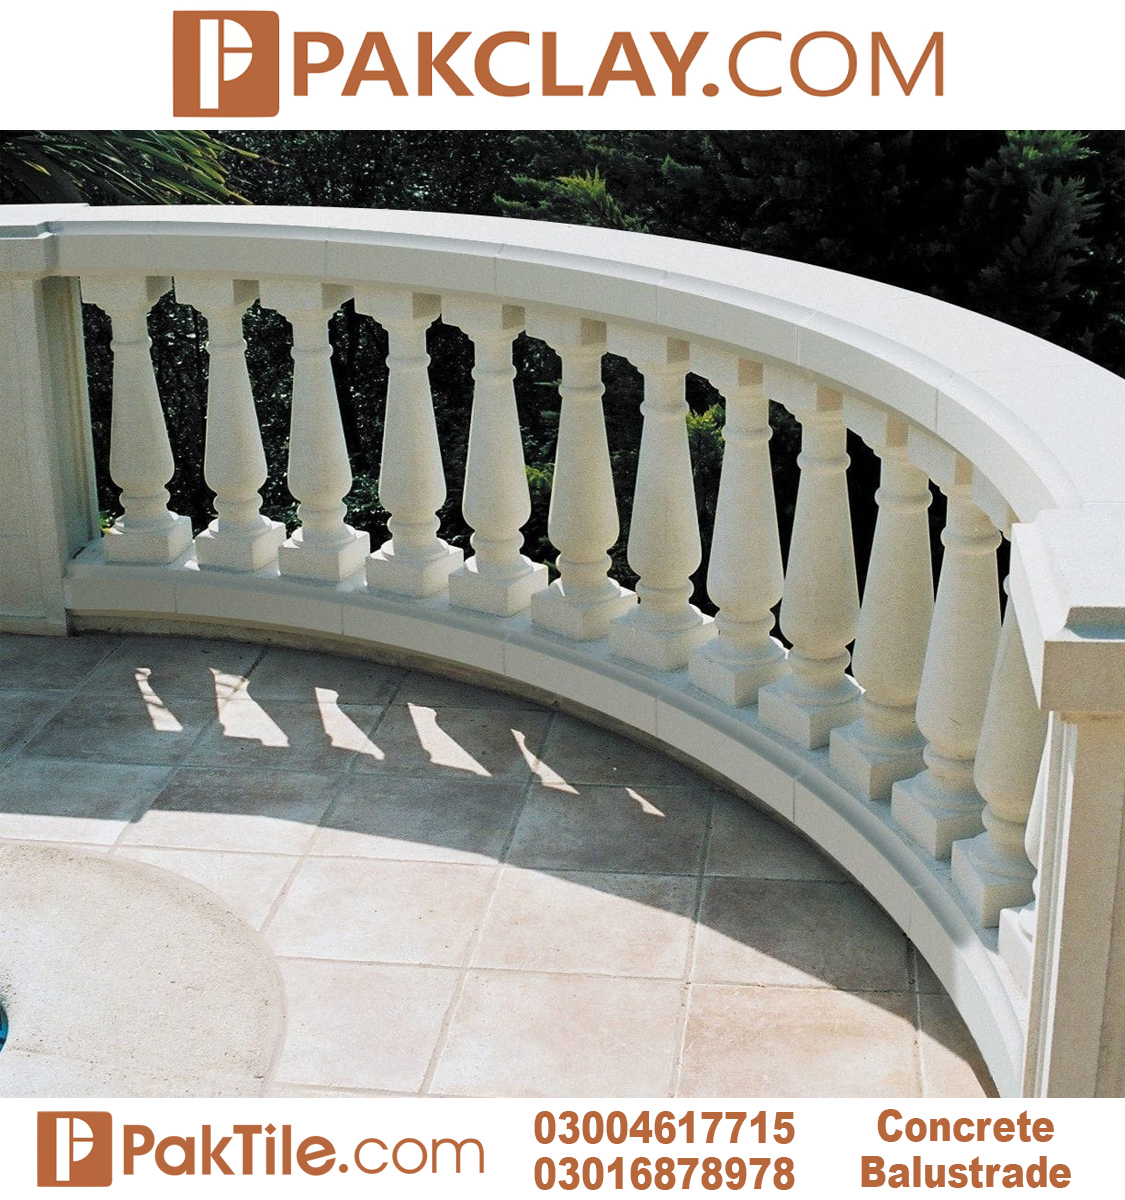 Pak clay tiles concrete balusters designs